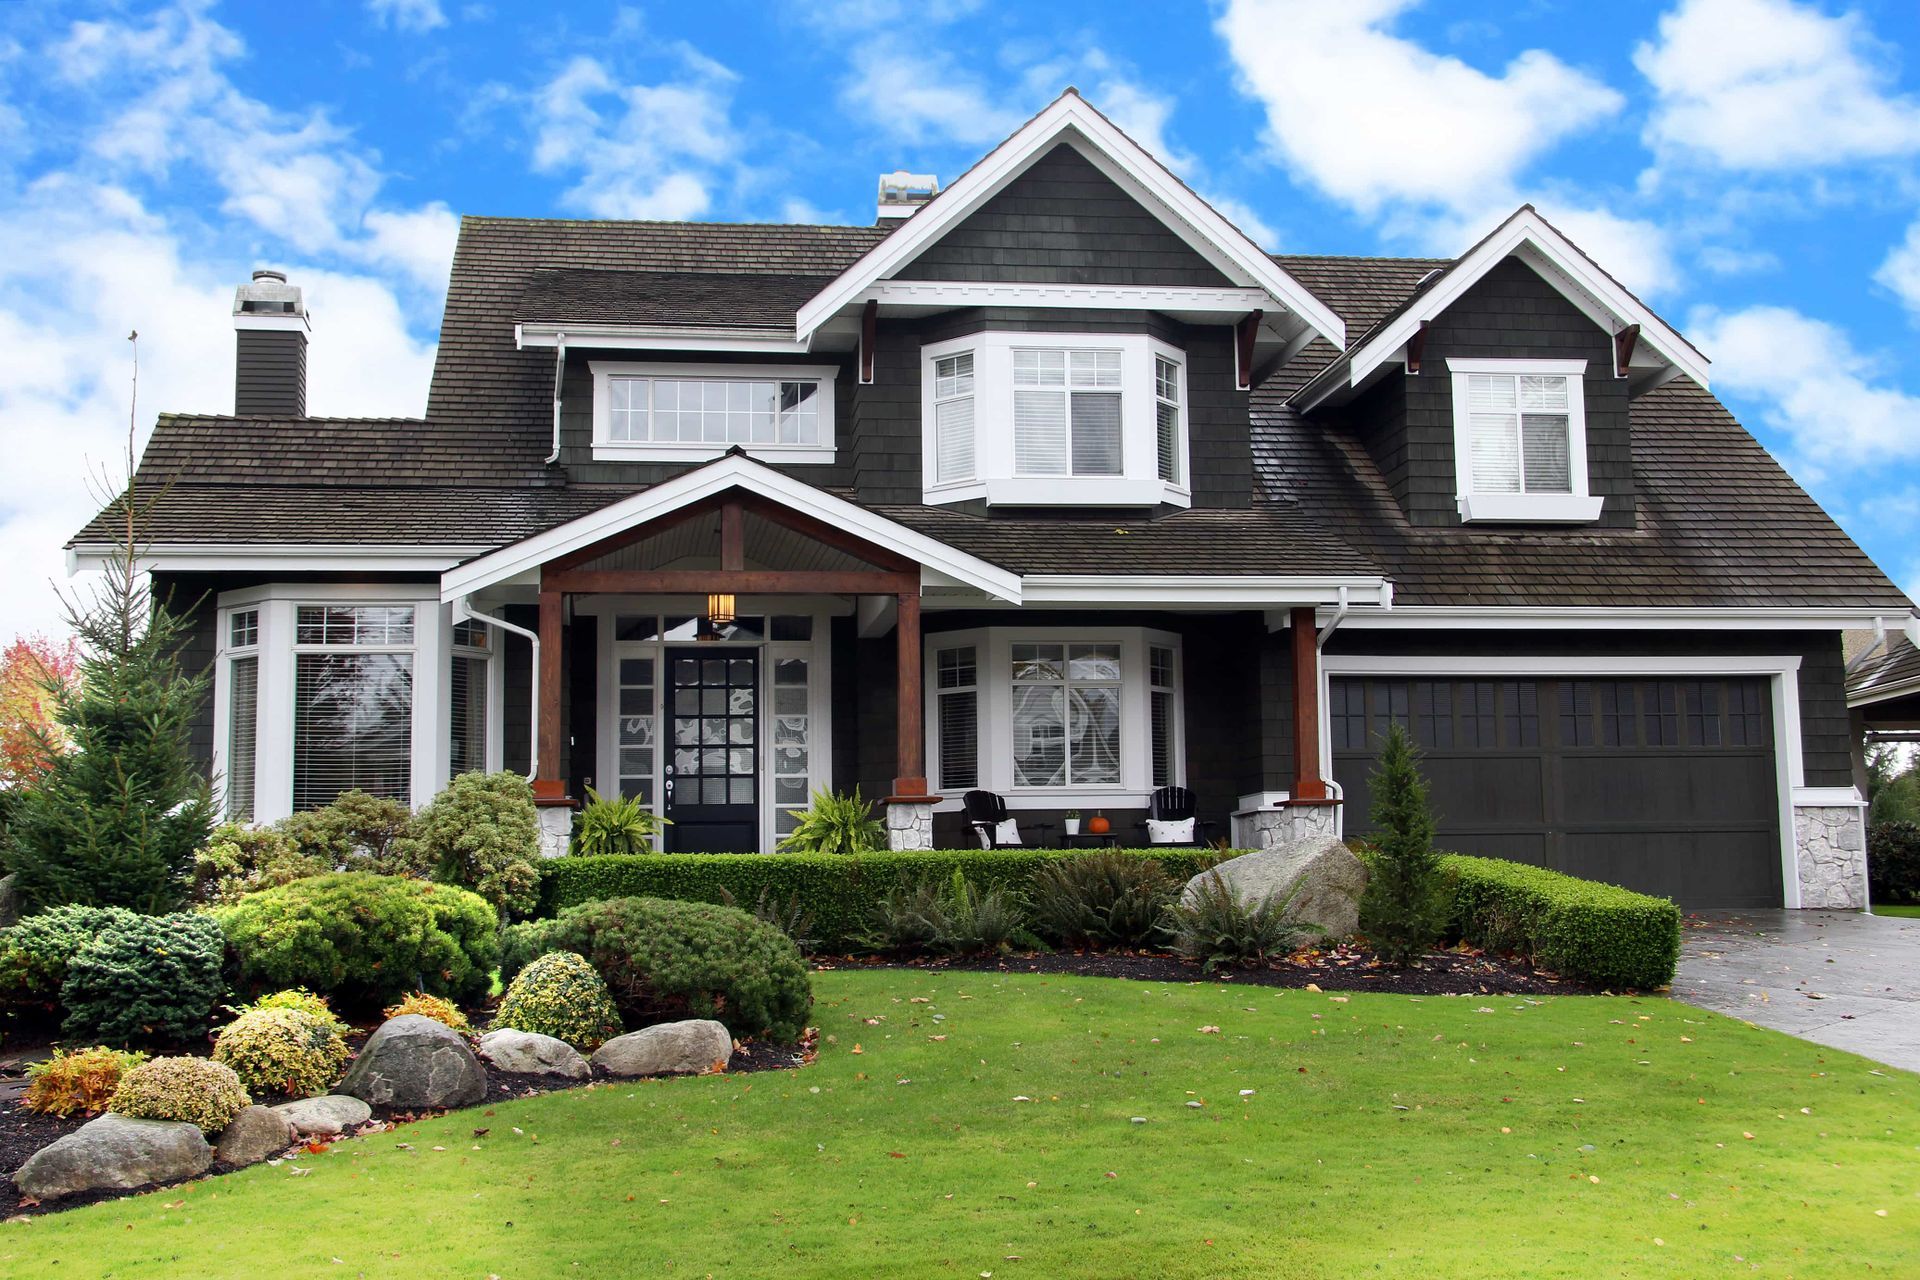 Beautiful Upscale Home In A Canadian Neighborhood